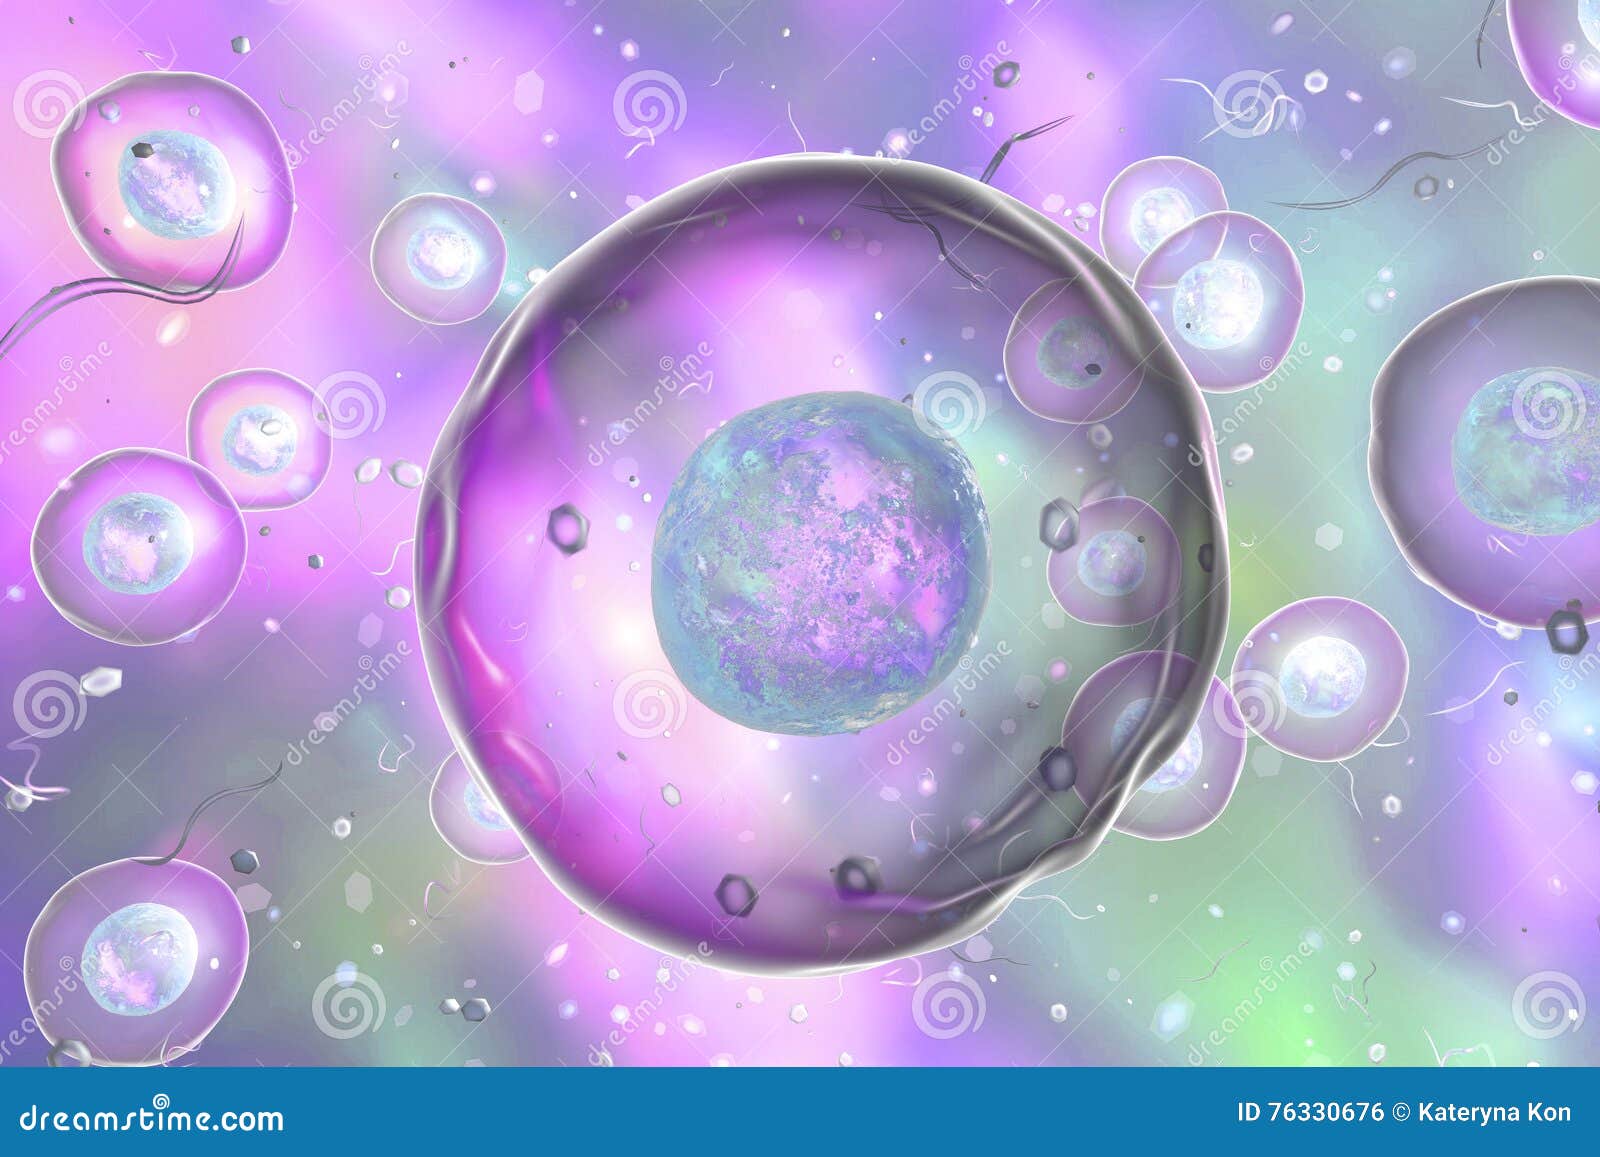 Human or animal cells stock illustration. Illustration of background -  76330676